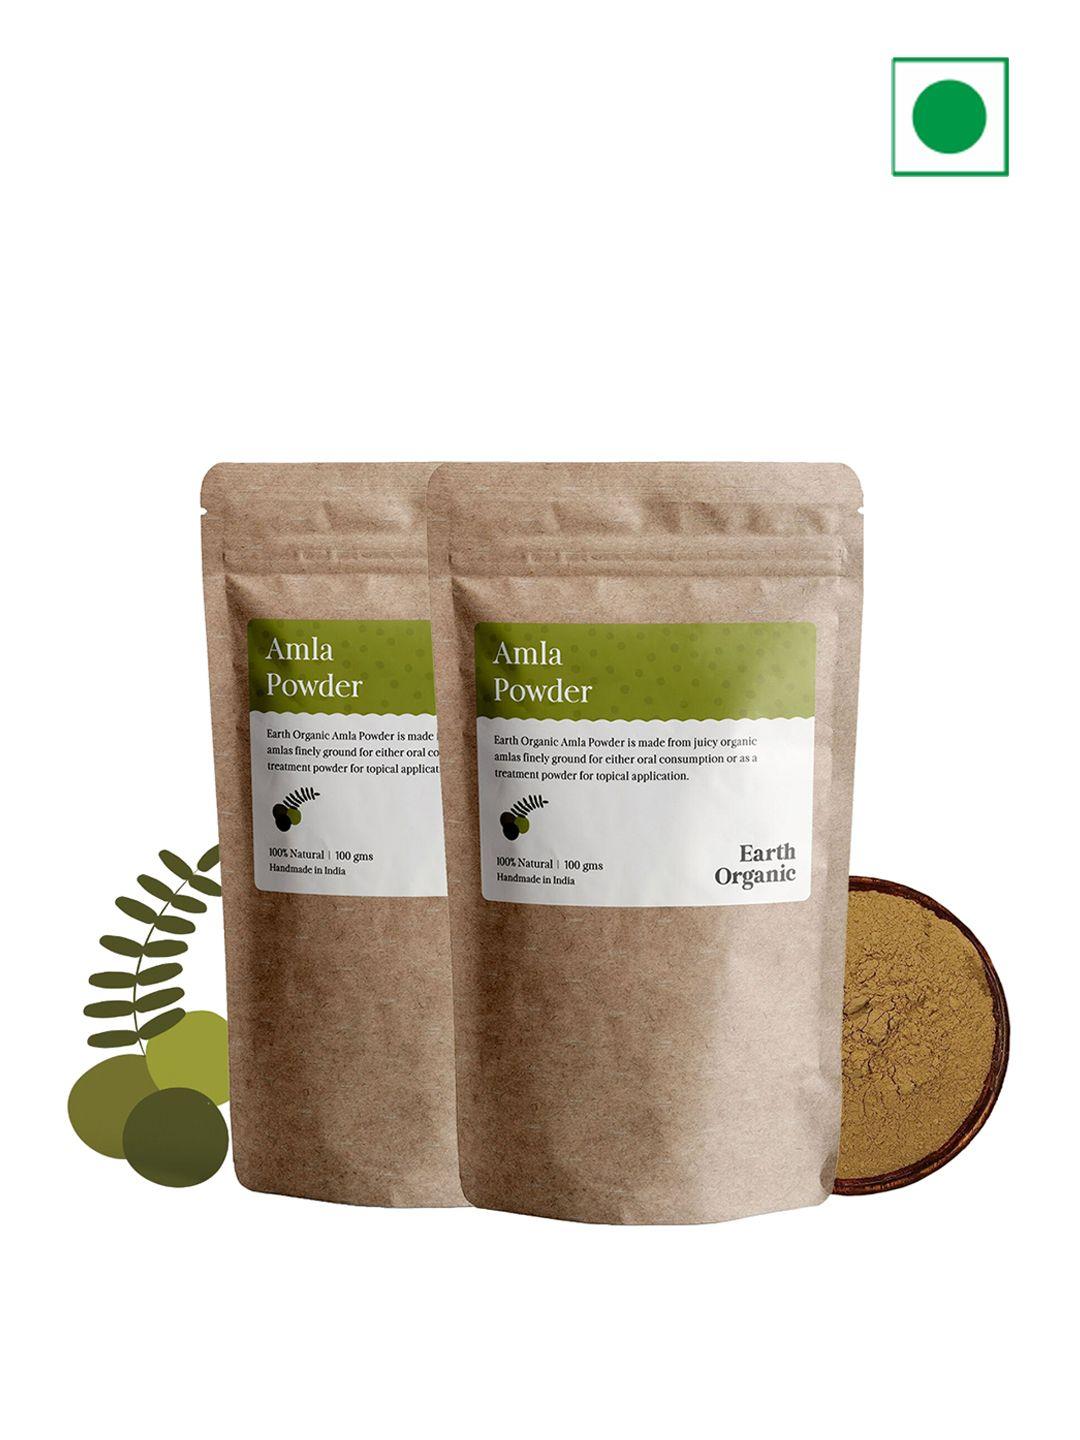 earth organic set of 2 natural & organic amla powder face & hair pack - 100 g each